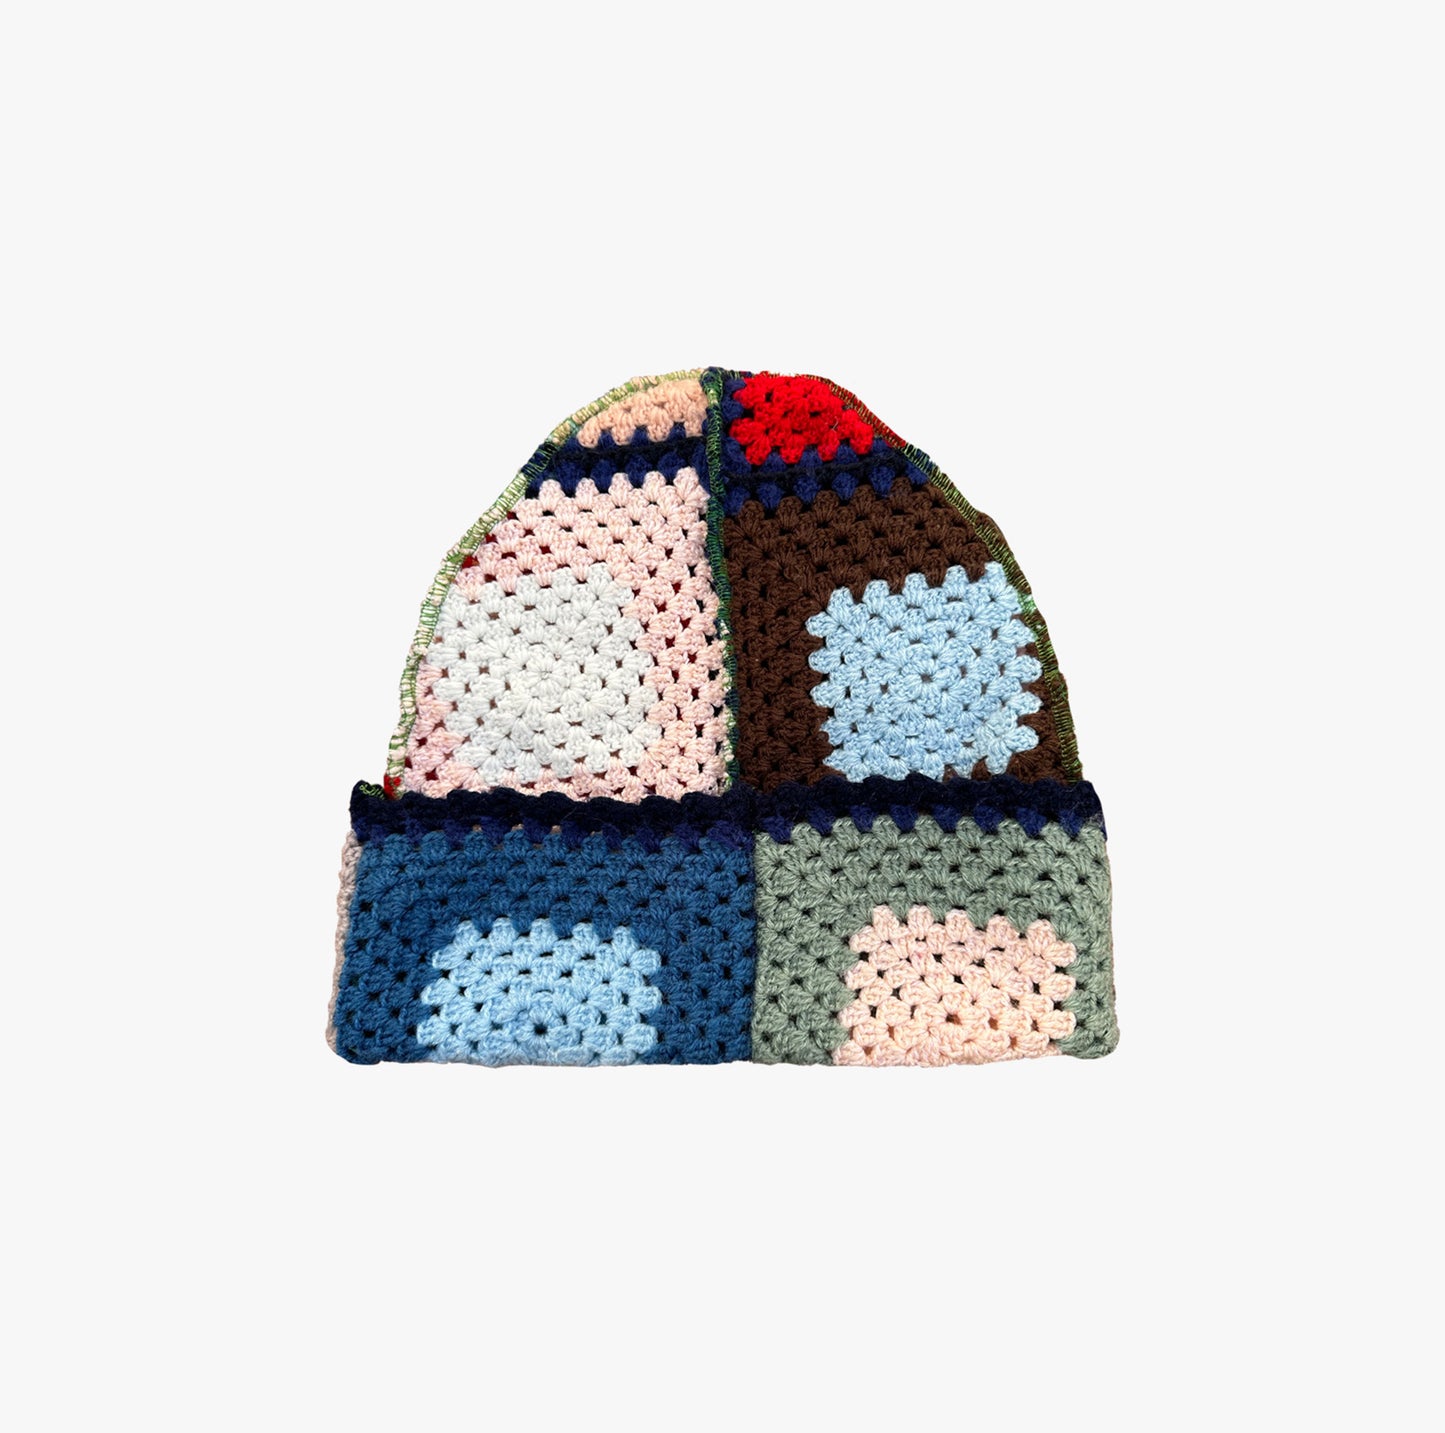 Handmade crochet overlocked beanie hat 